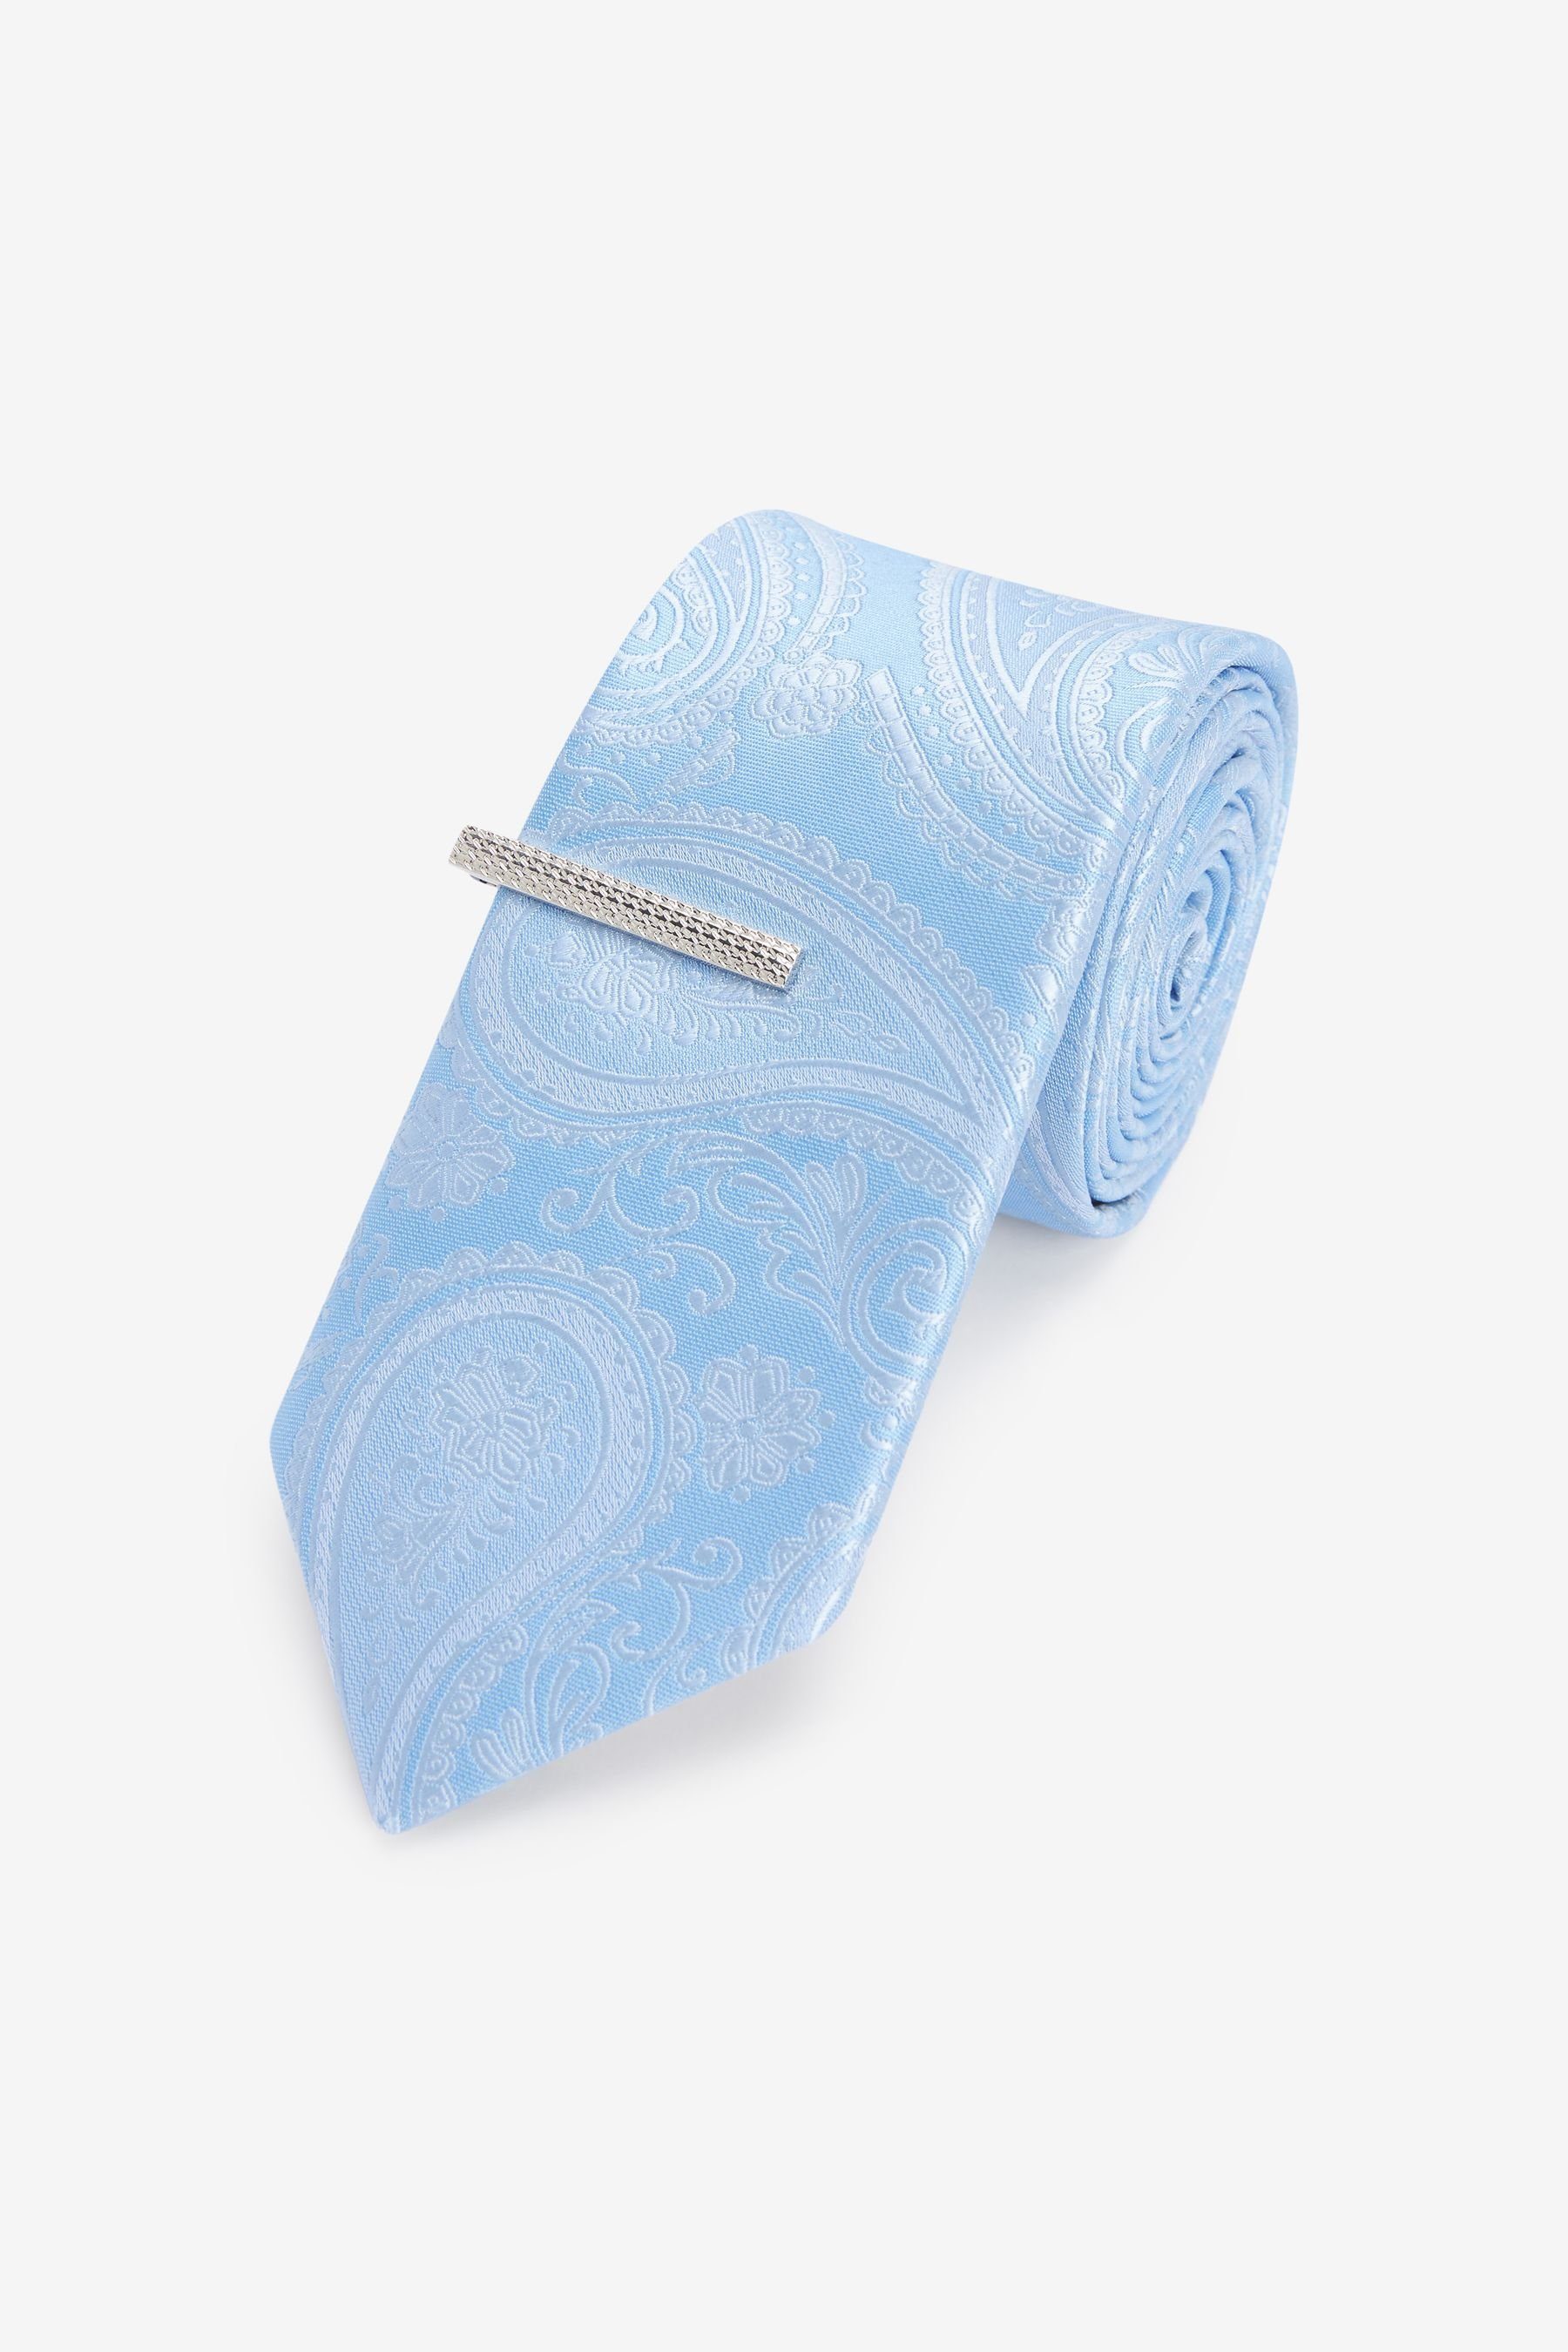 mit (2-St) Slim Krawattenklammer, Krawatte Next Light Paisley Krawatte Gemusterte Blue